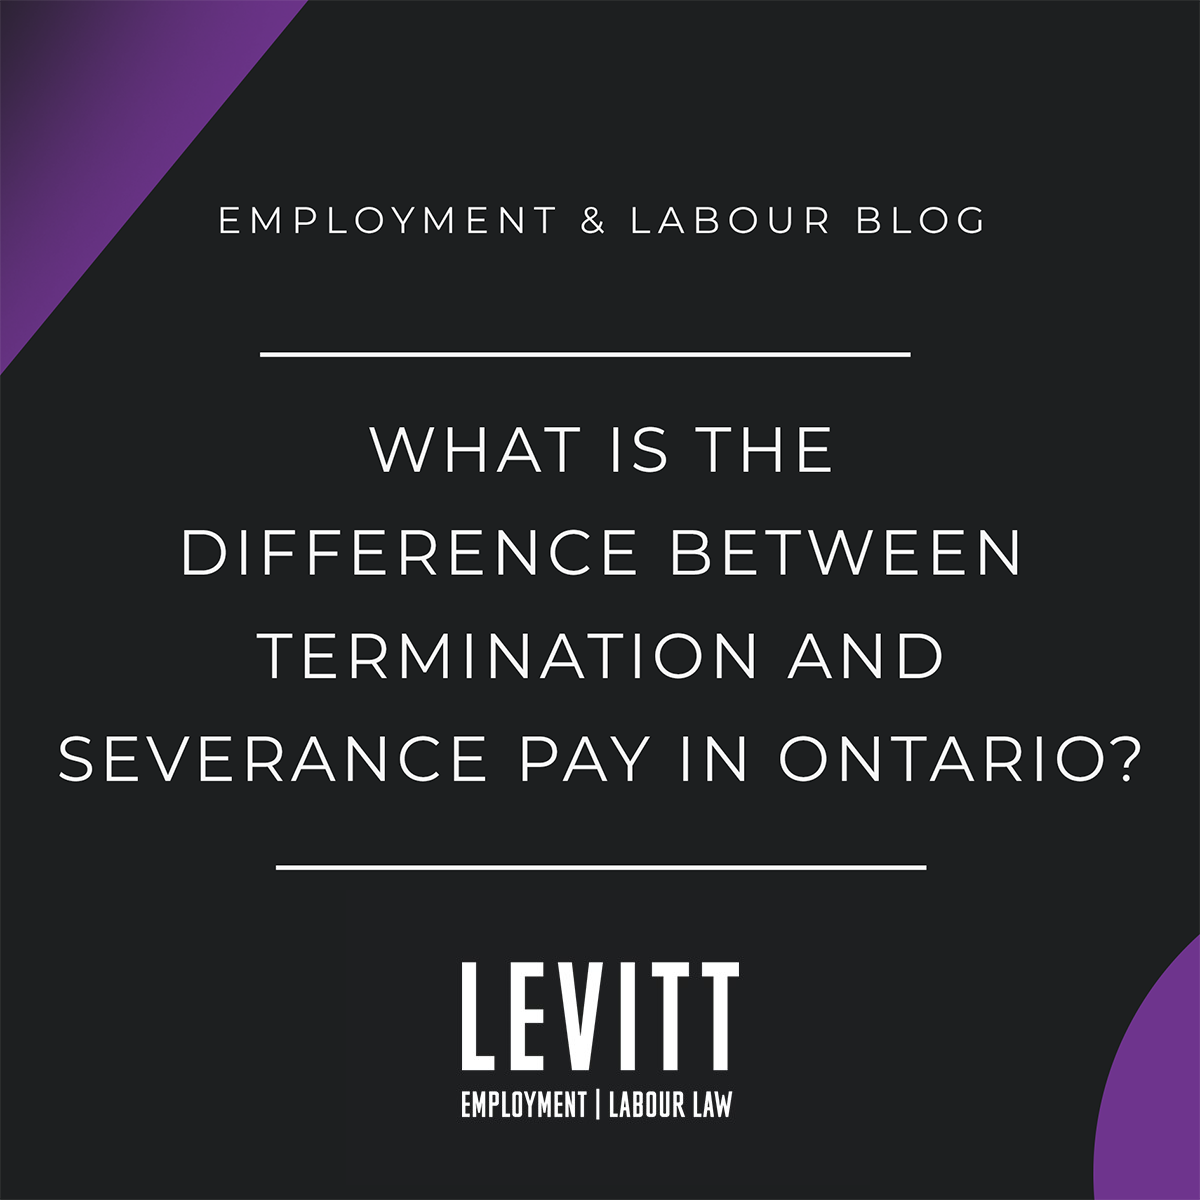 Ontario, B.C. & Alberta Severance Pay Calculator, Termination Pay